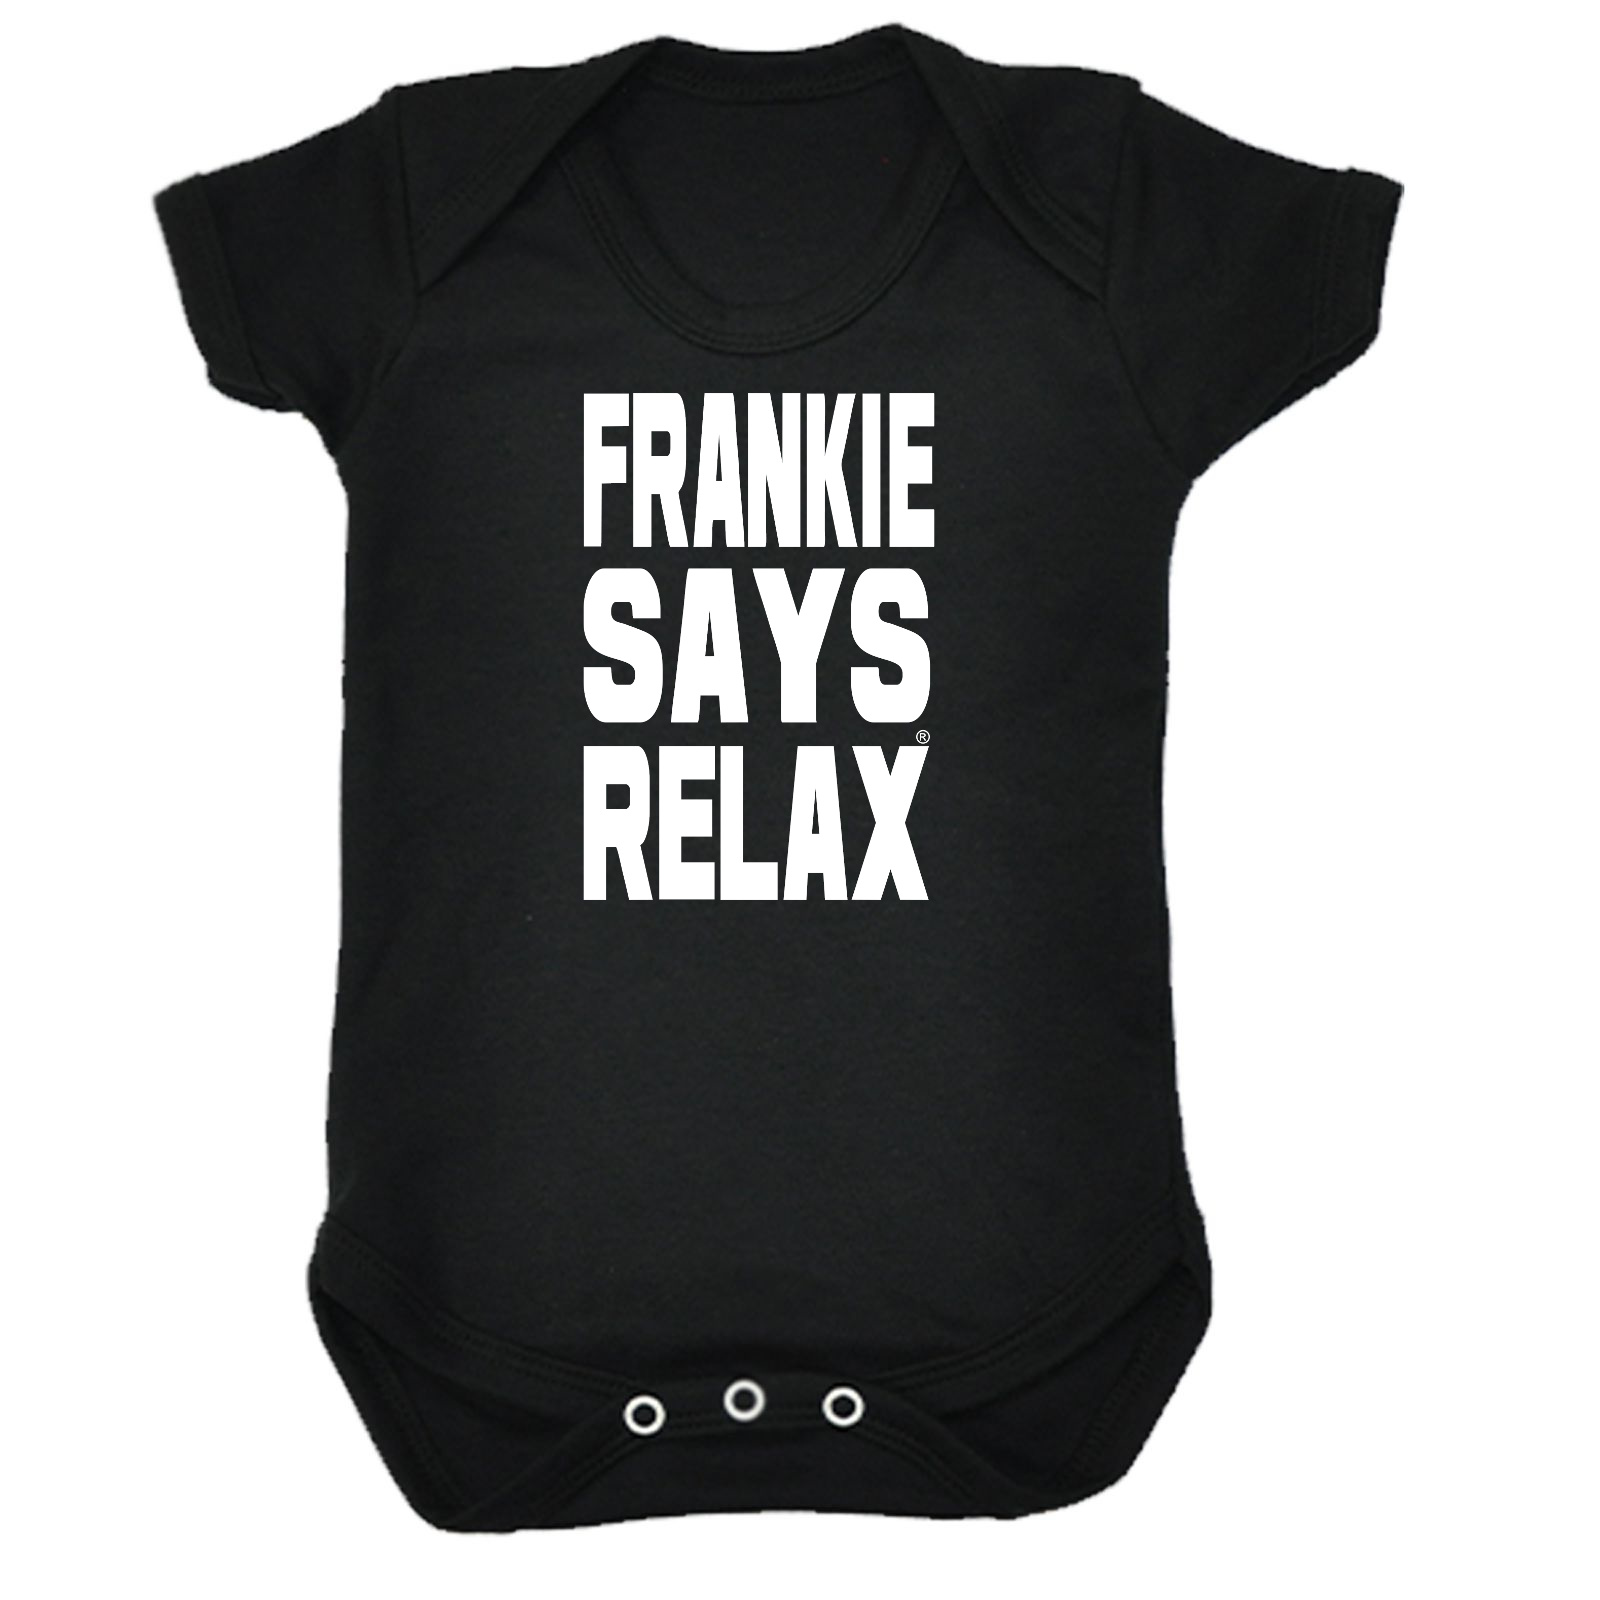 FUNNY BABY NEONATO Babygrow Pagliaccetto Tuta-Frankie Says Relax solido 